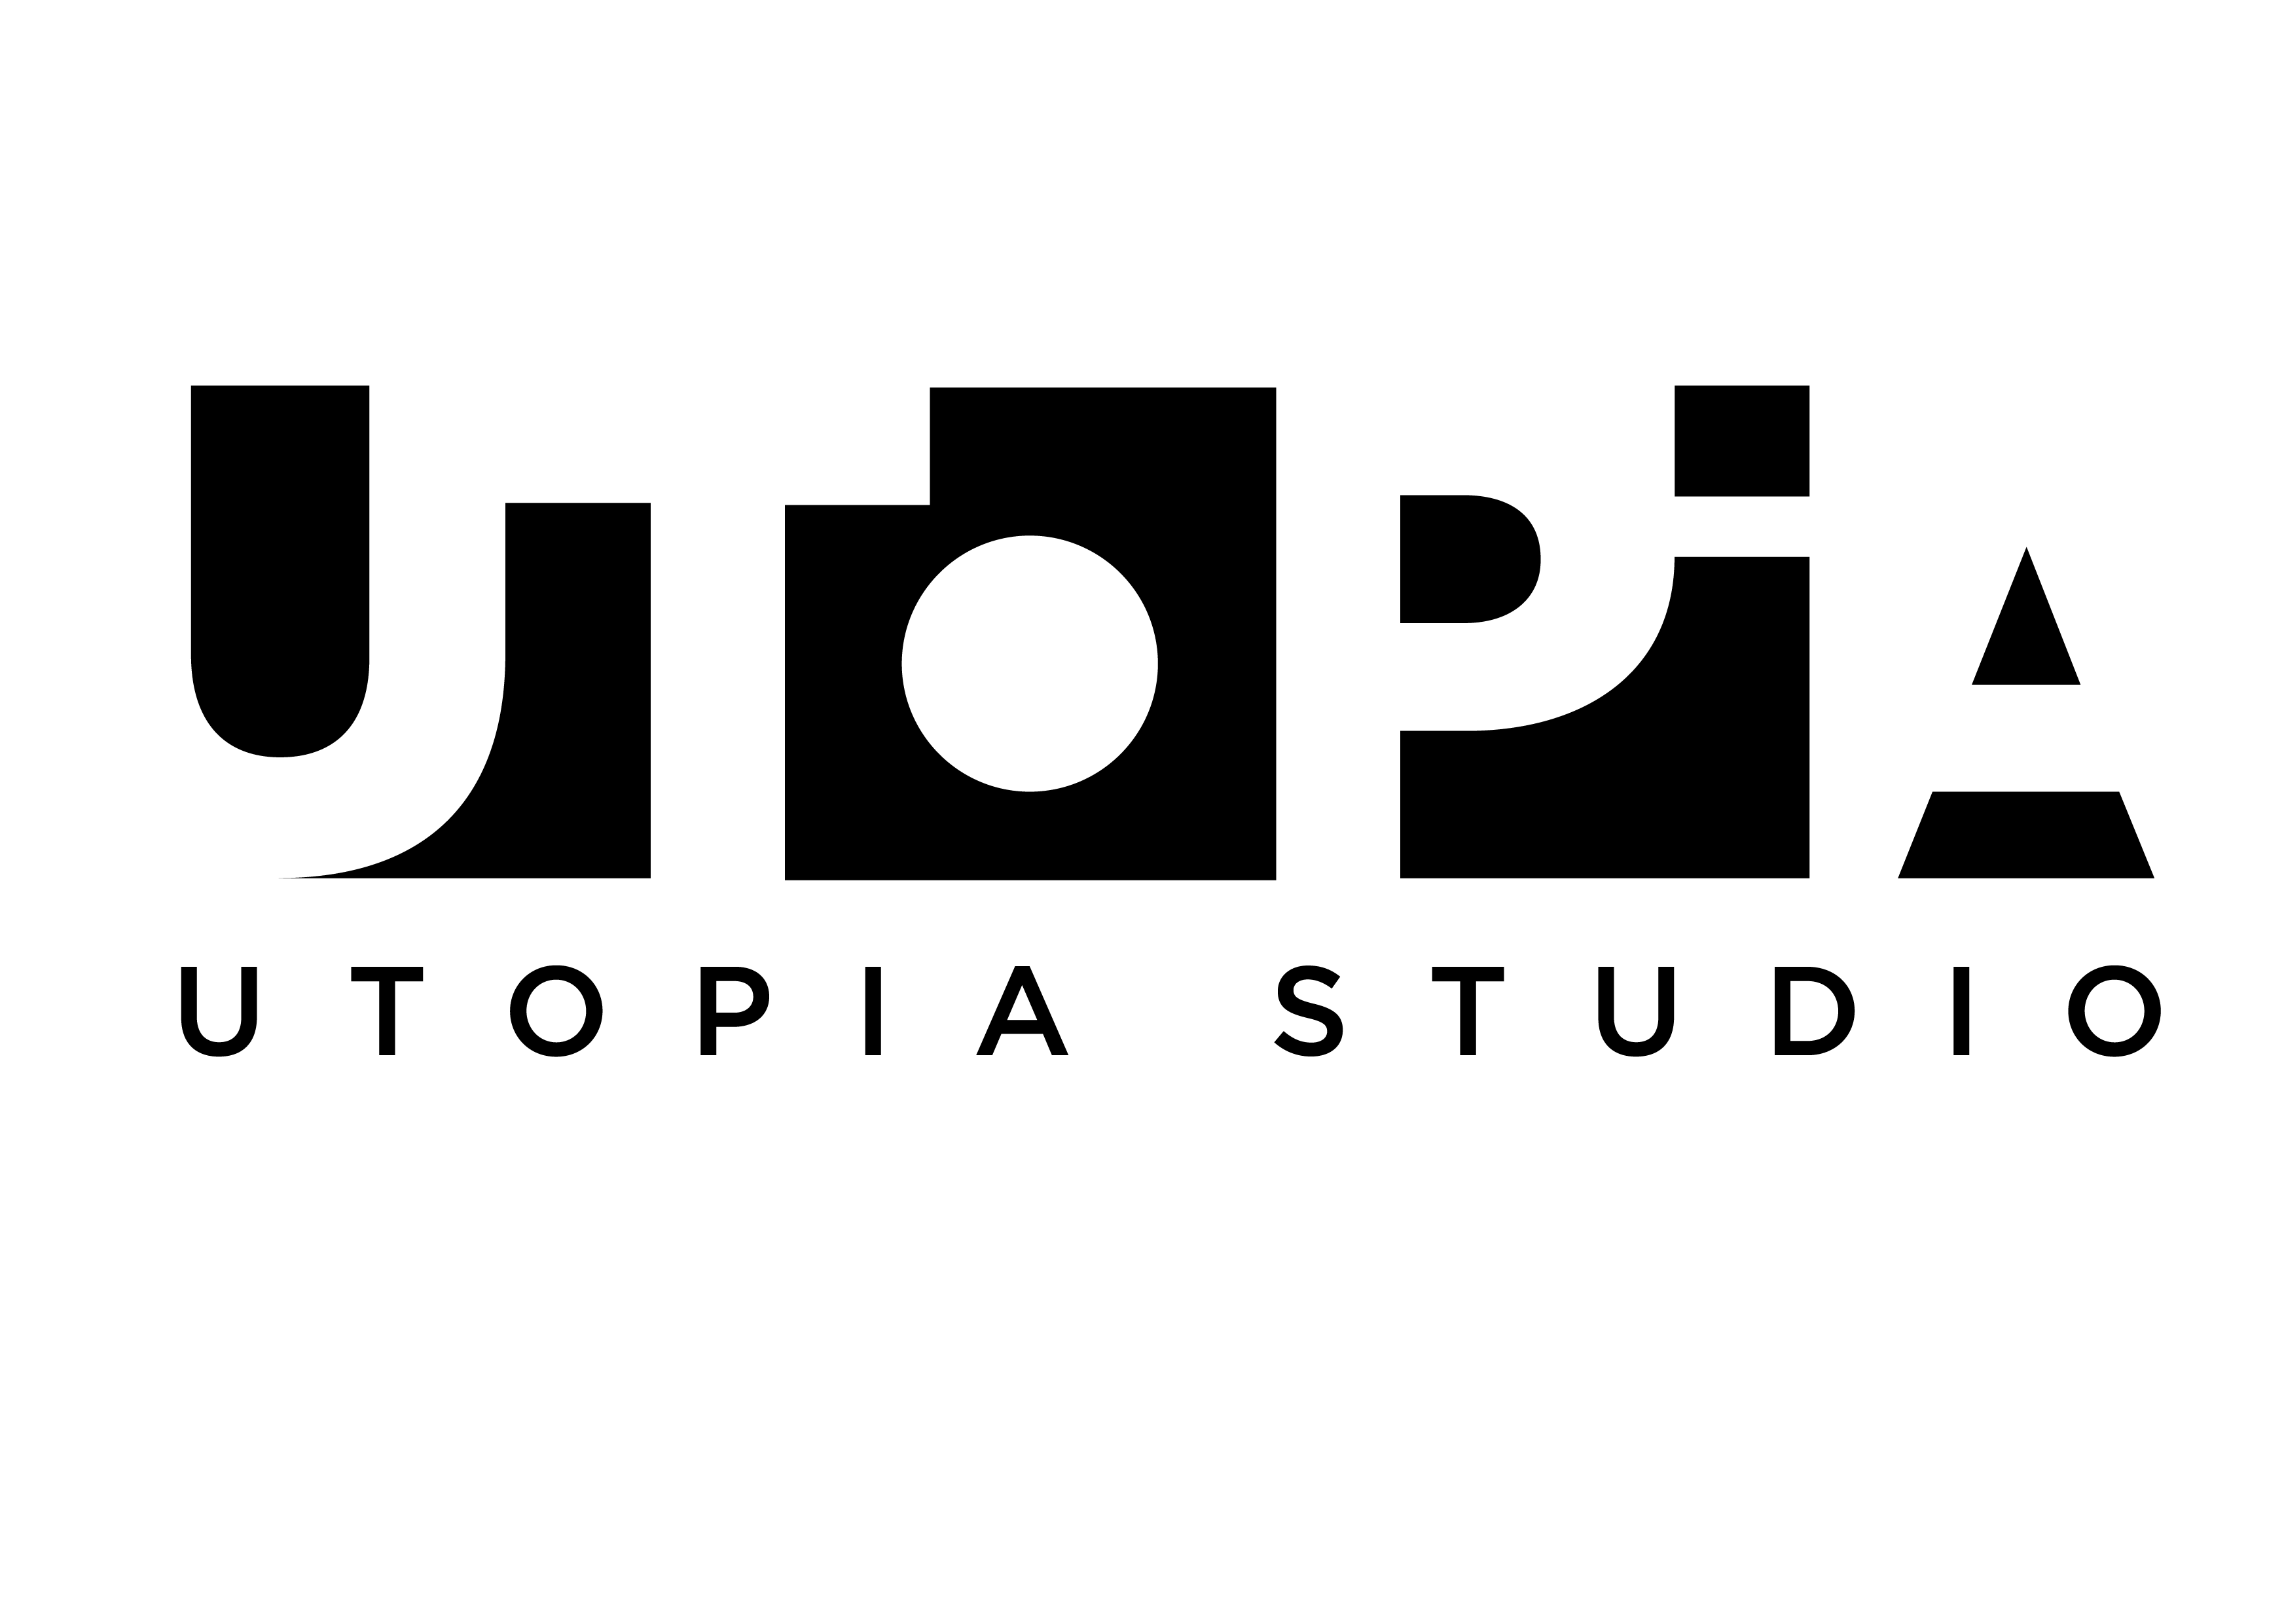 Utopia Sudio